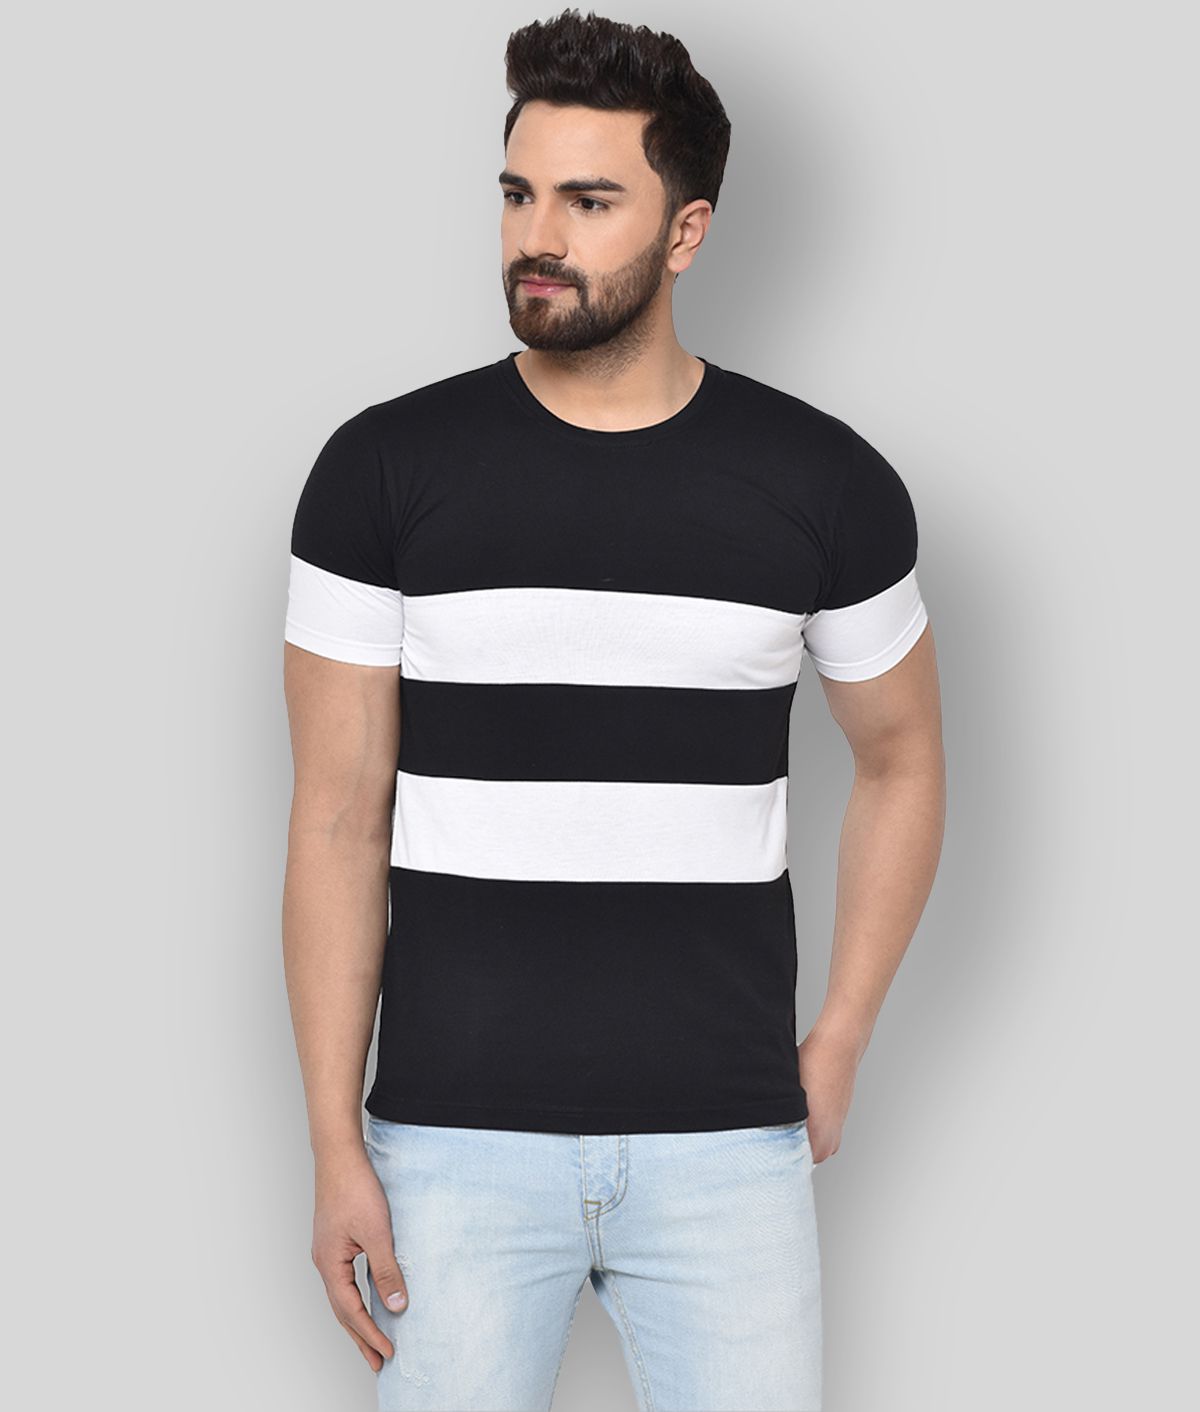     			Glito - Multicolor Cotton Blend Regular Fit  Men's T-Shirt ( Pack of 1 )